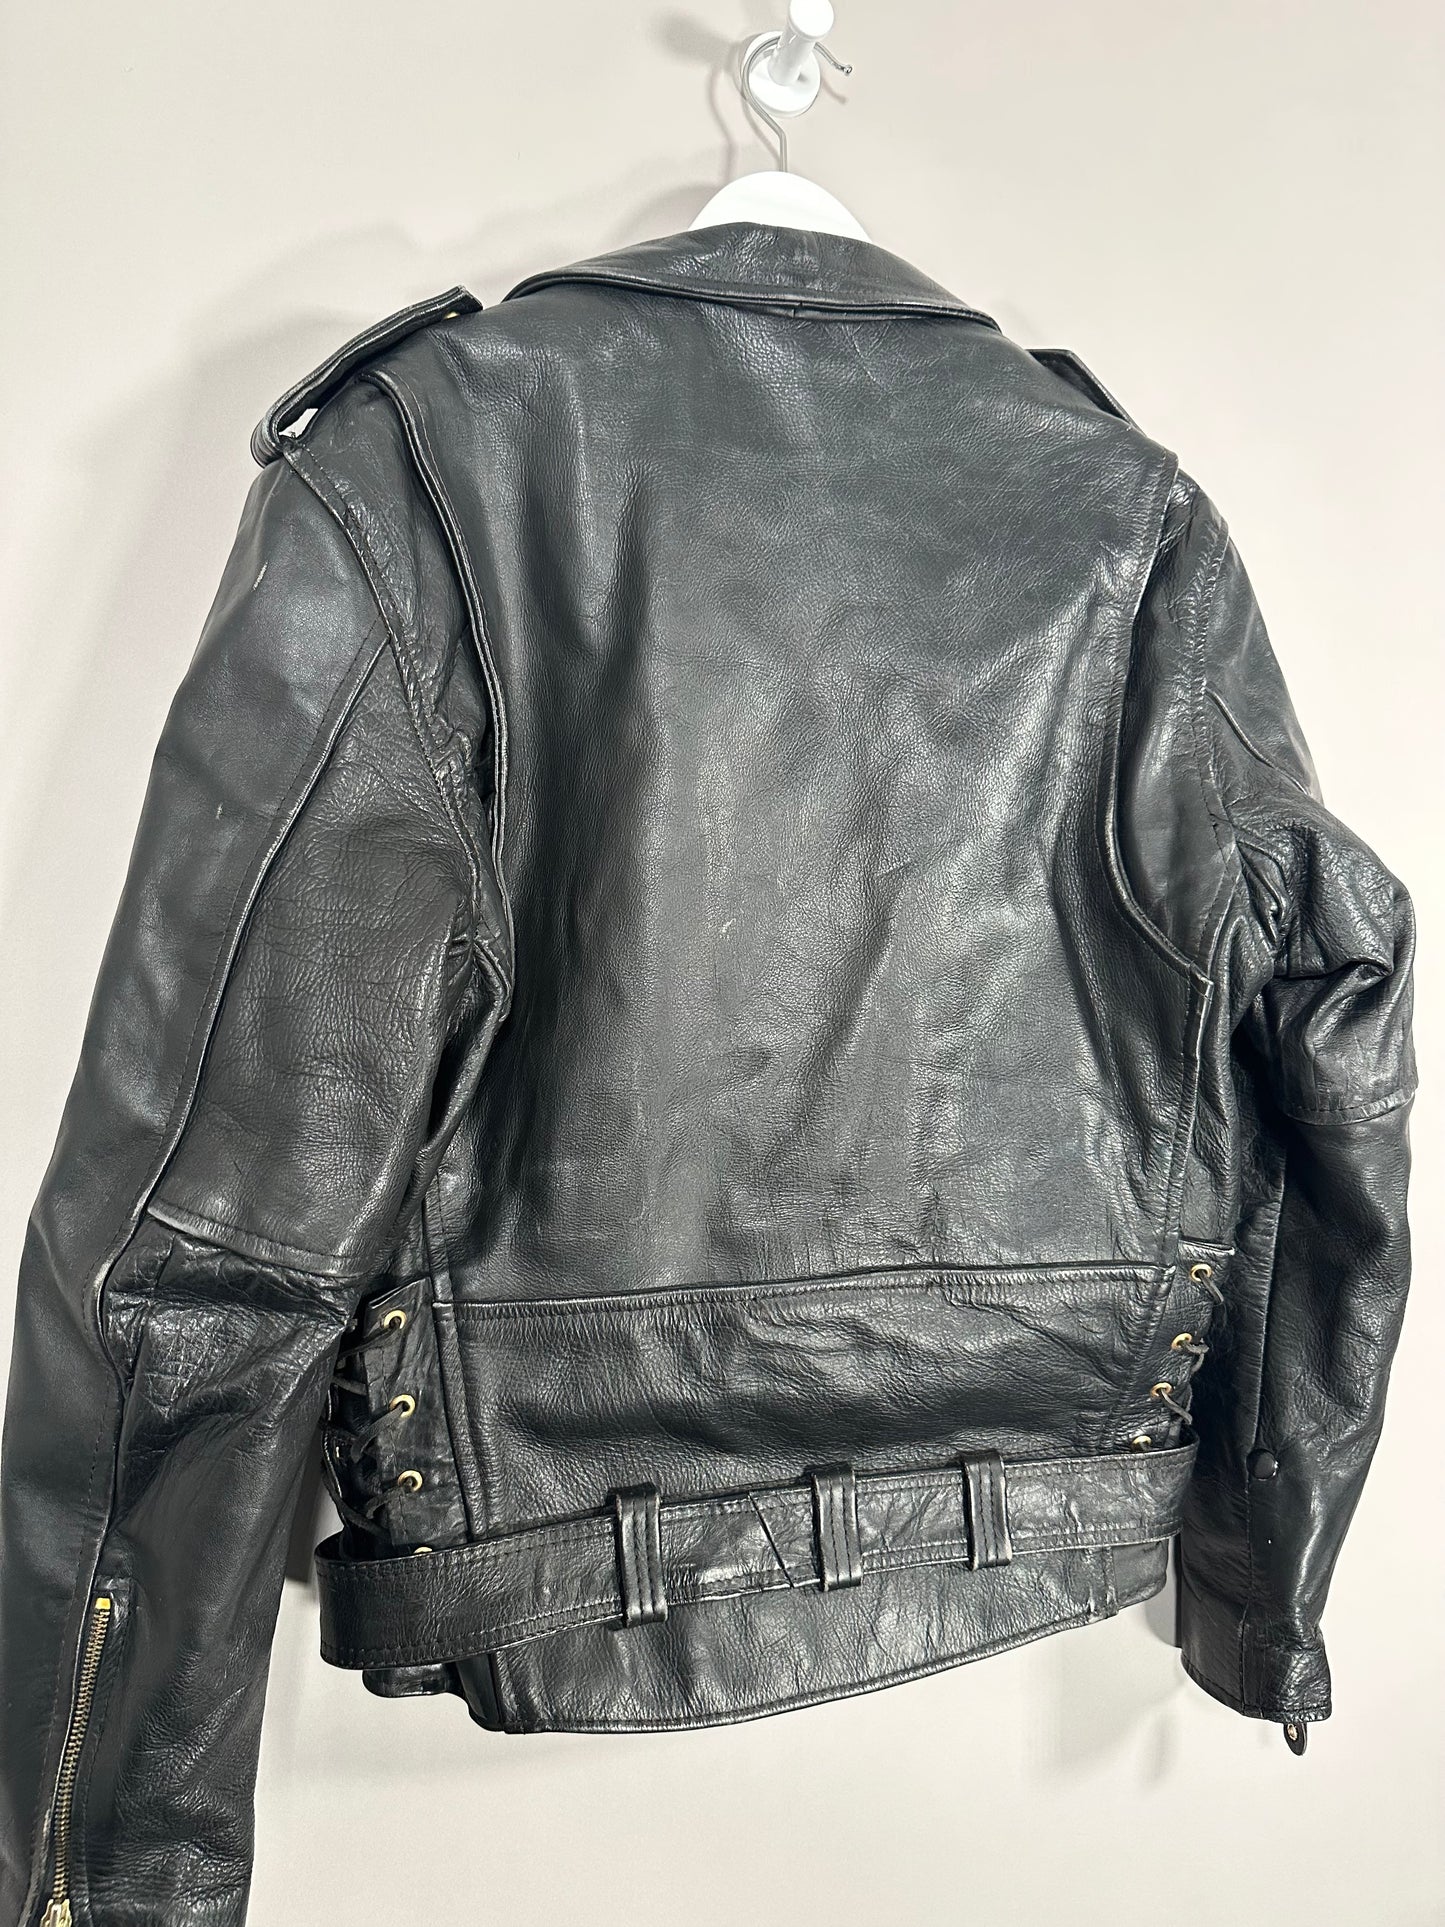 90s Leather Jacket - Sz 38